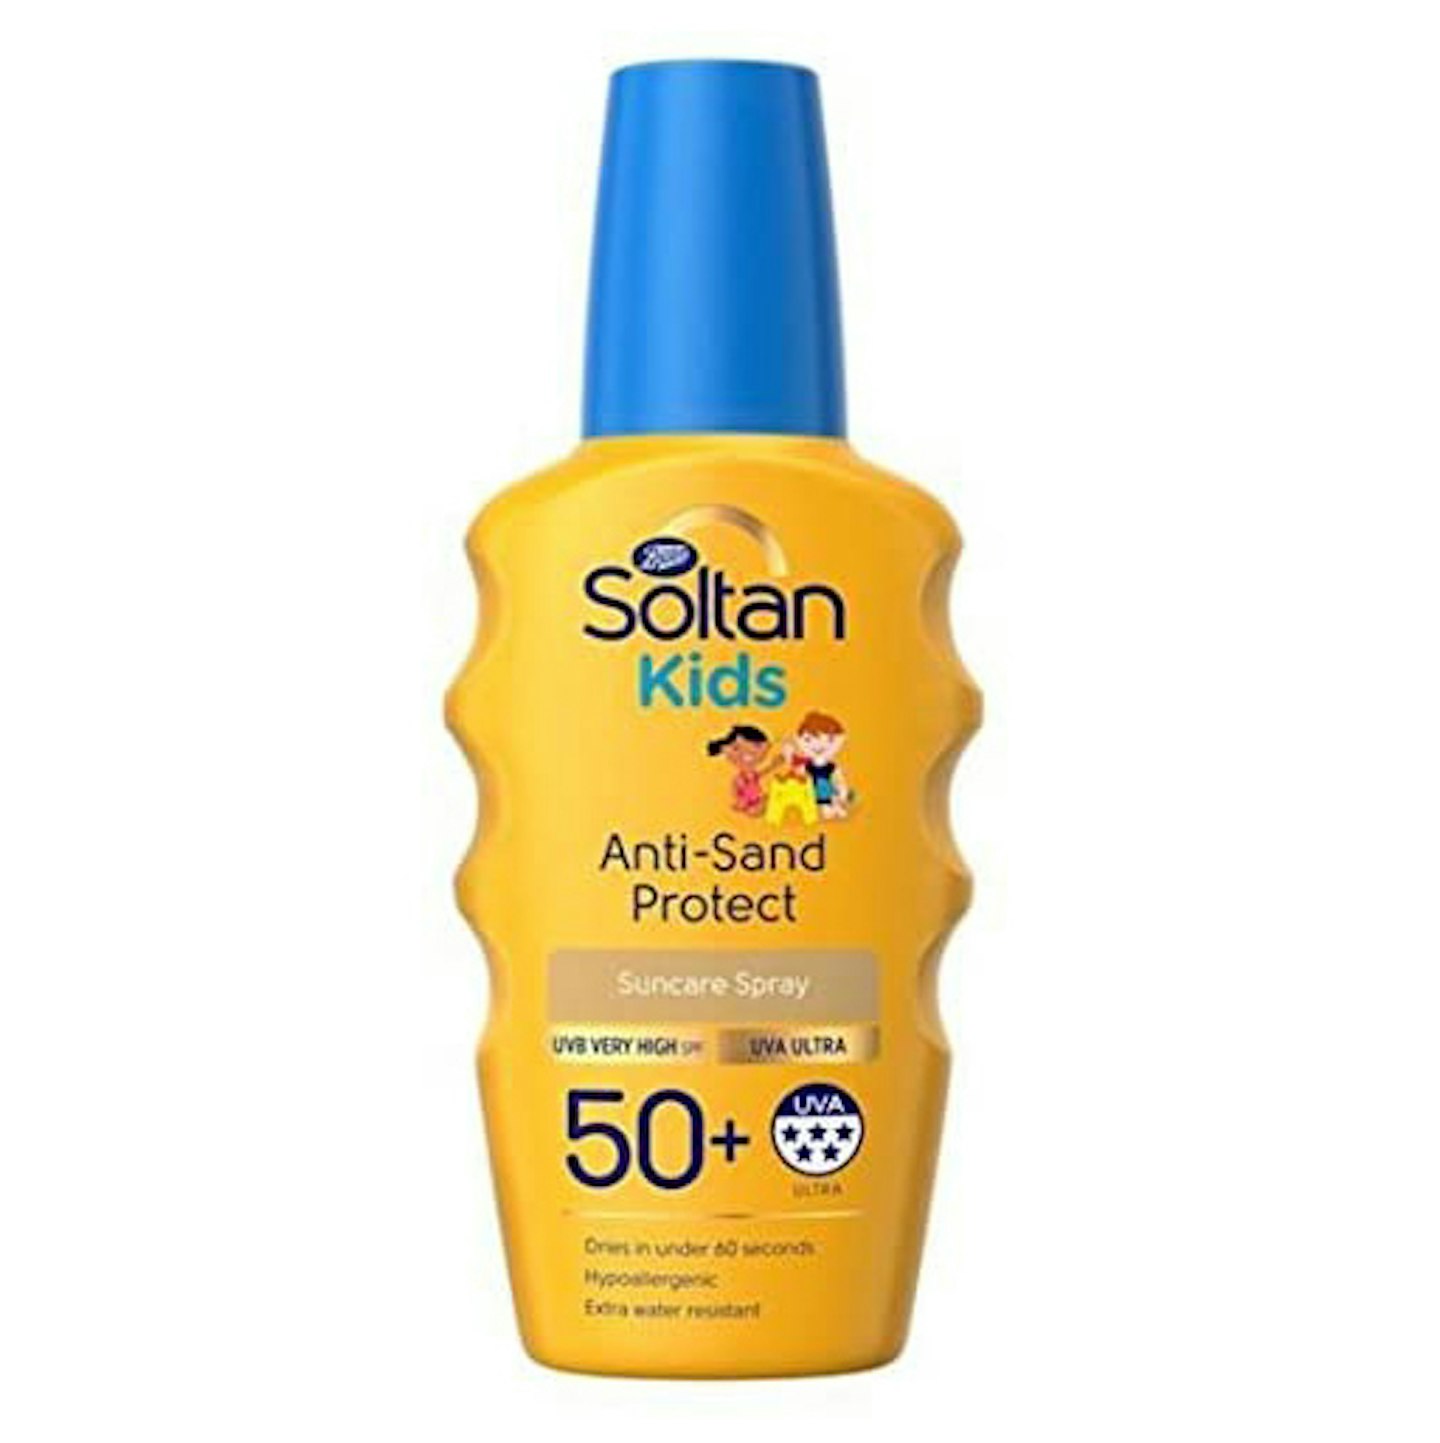 Soltan Suncare Kids and Baby Sun Cream Spray Anti-Sand Protection SPF 50+